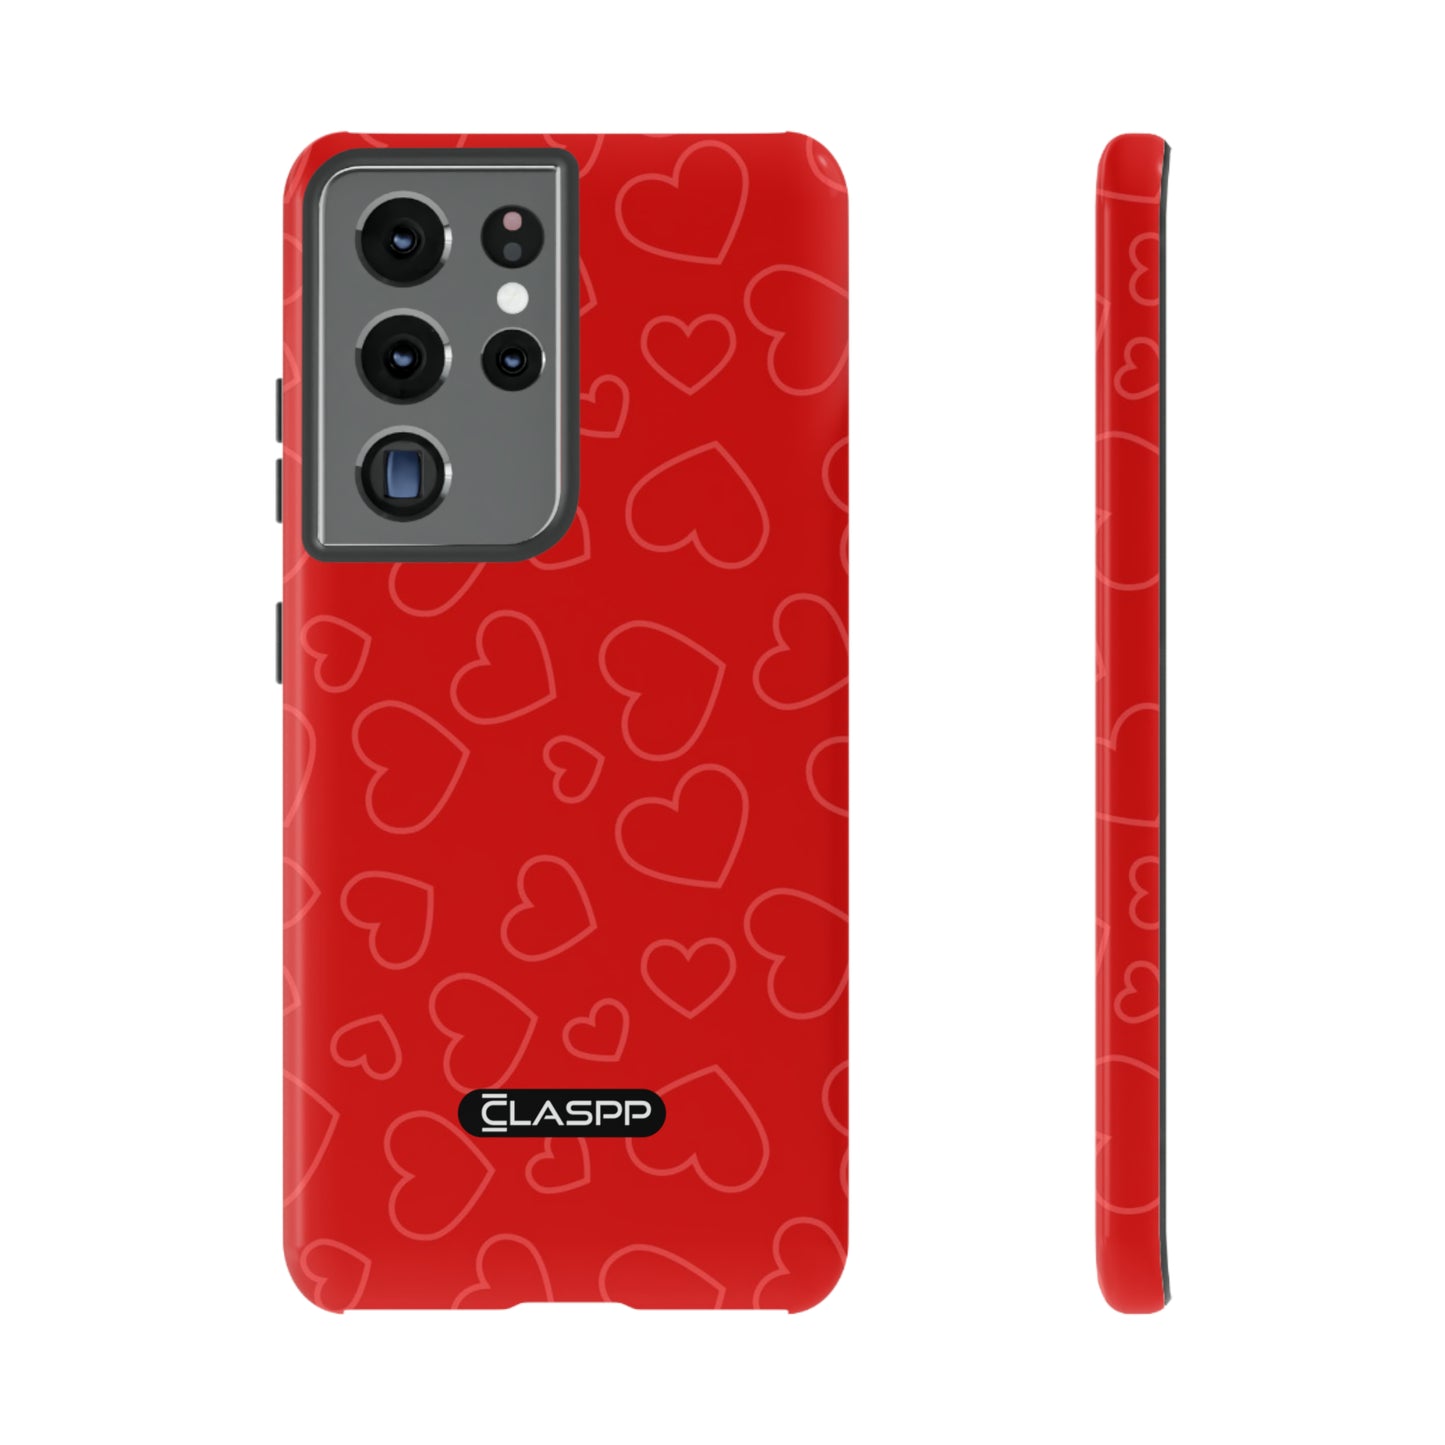 Samsung Galaxy S21 ultra Amora Valentine's Day phone case